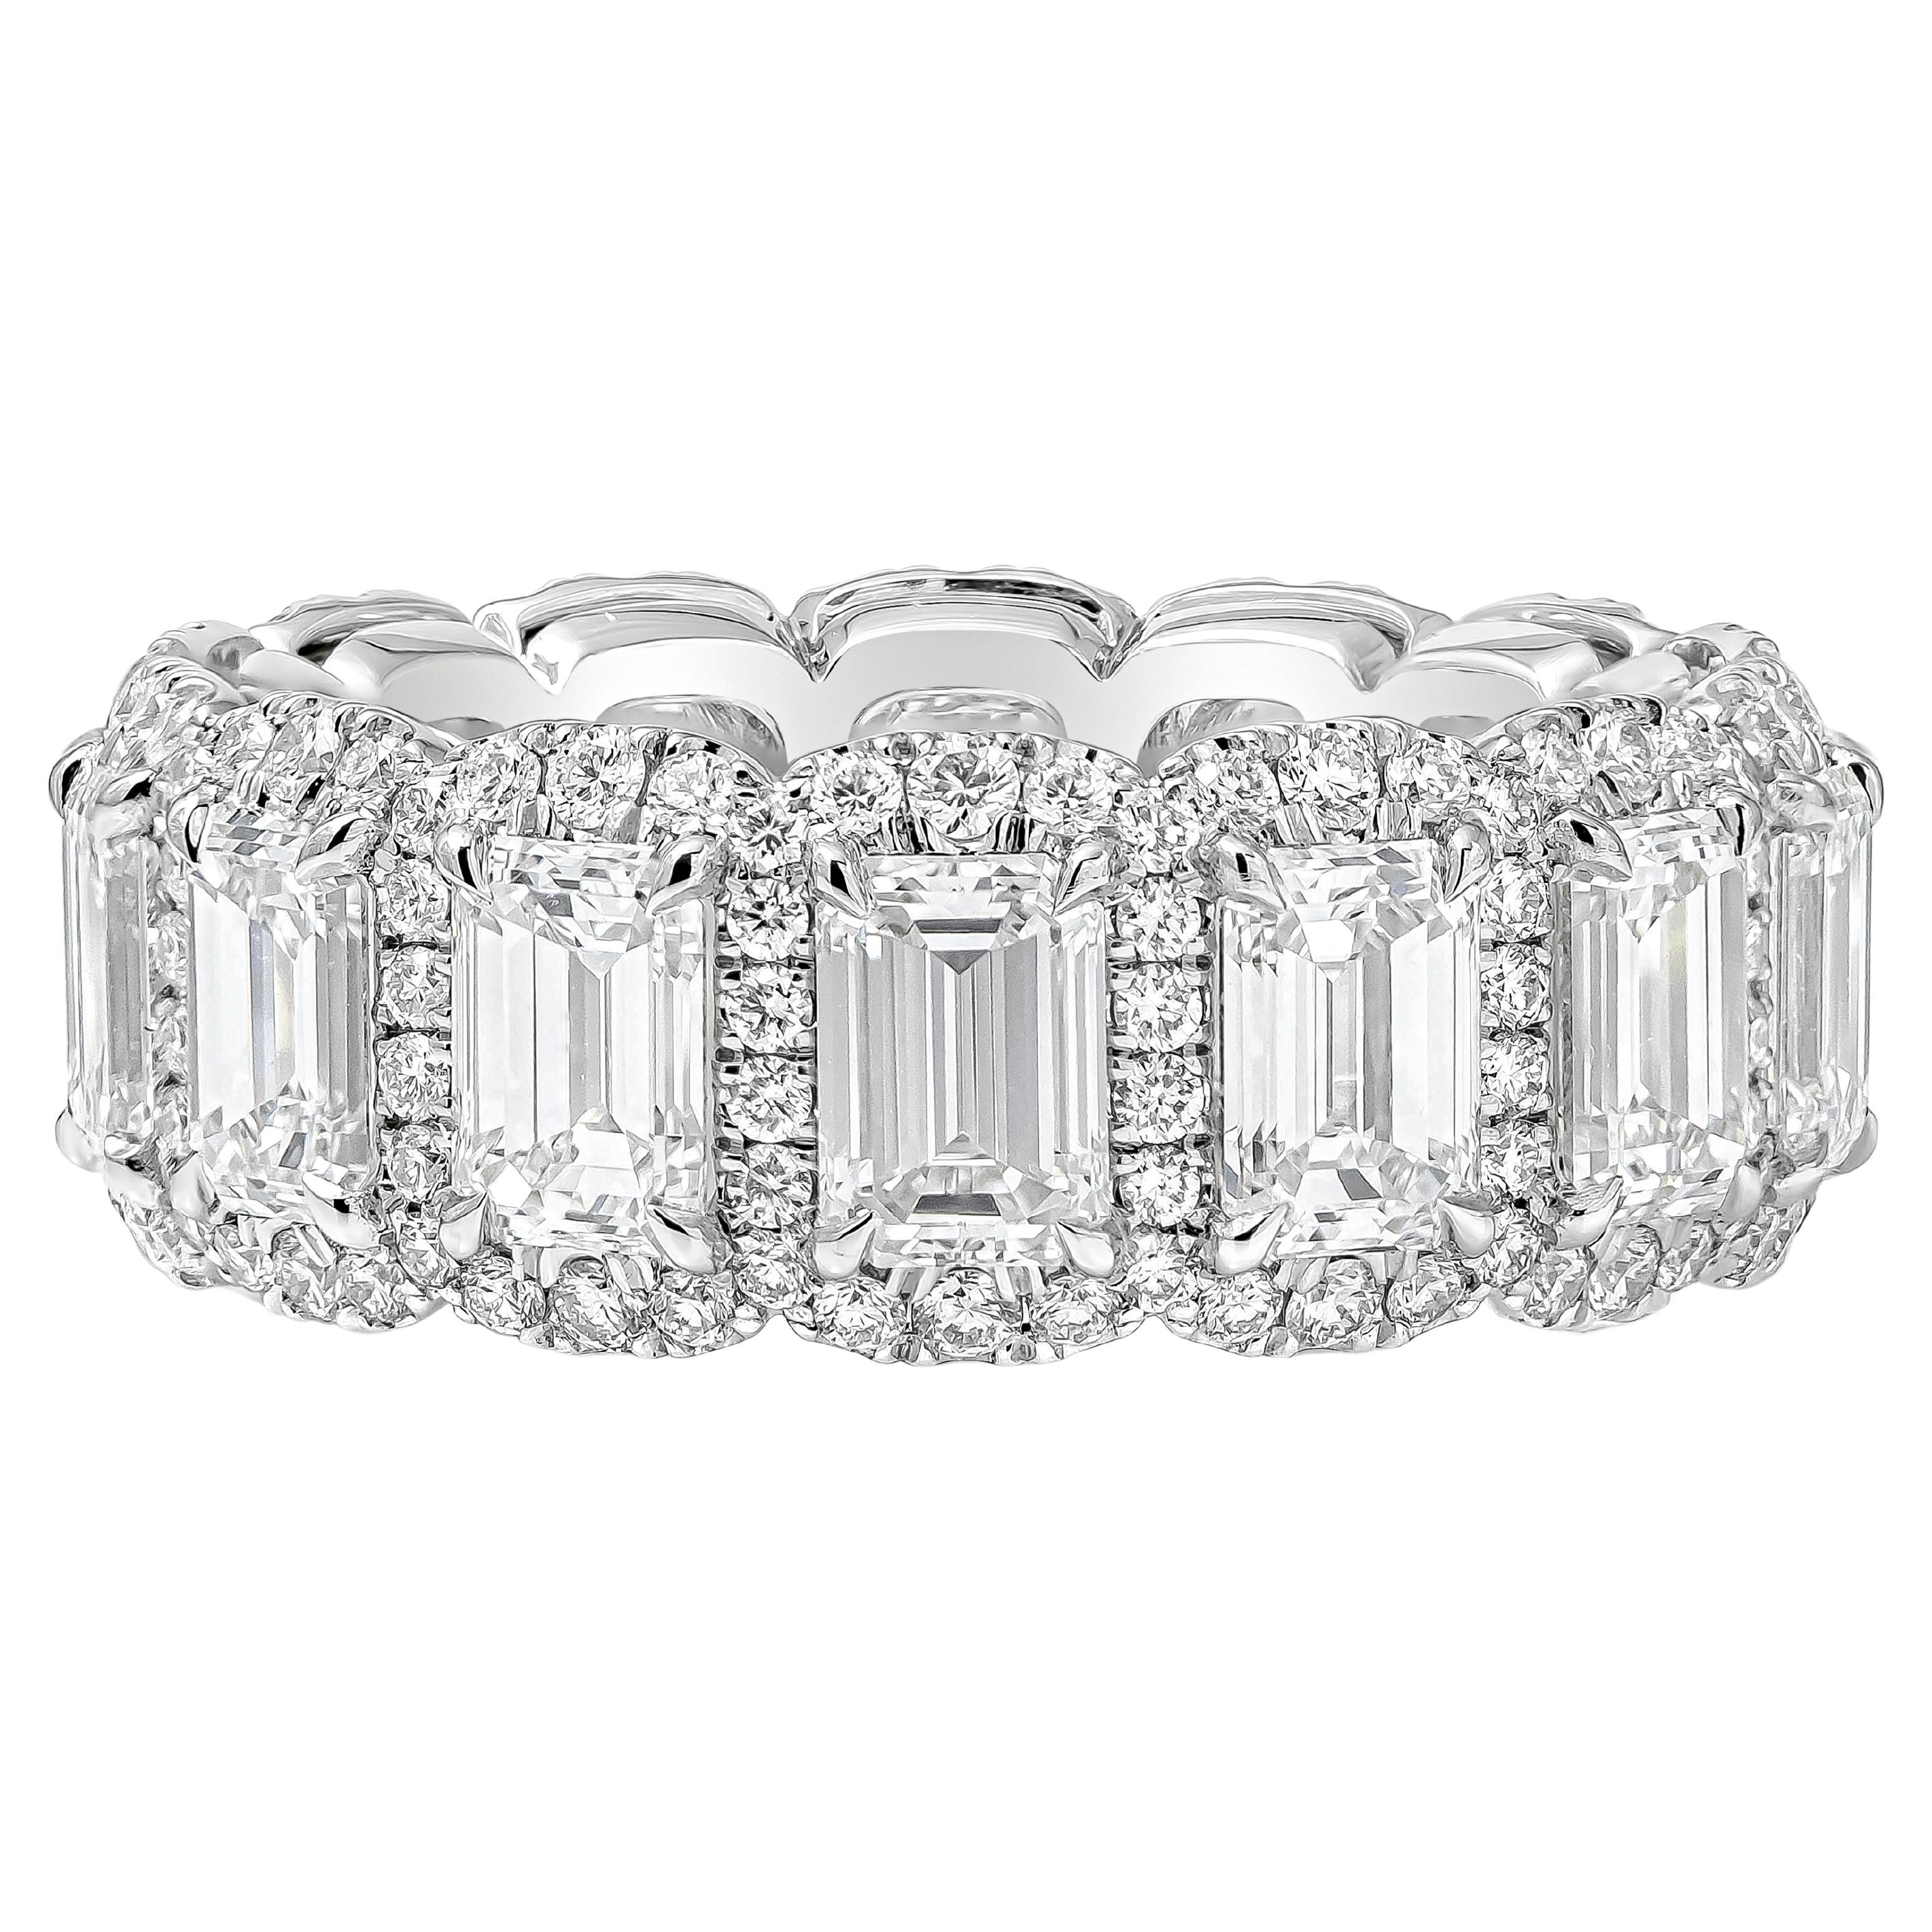 Roman Malakov 5.73 Carats Total Emerald Cut Diamond Halo Eternity Wedding Band